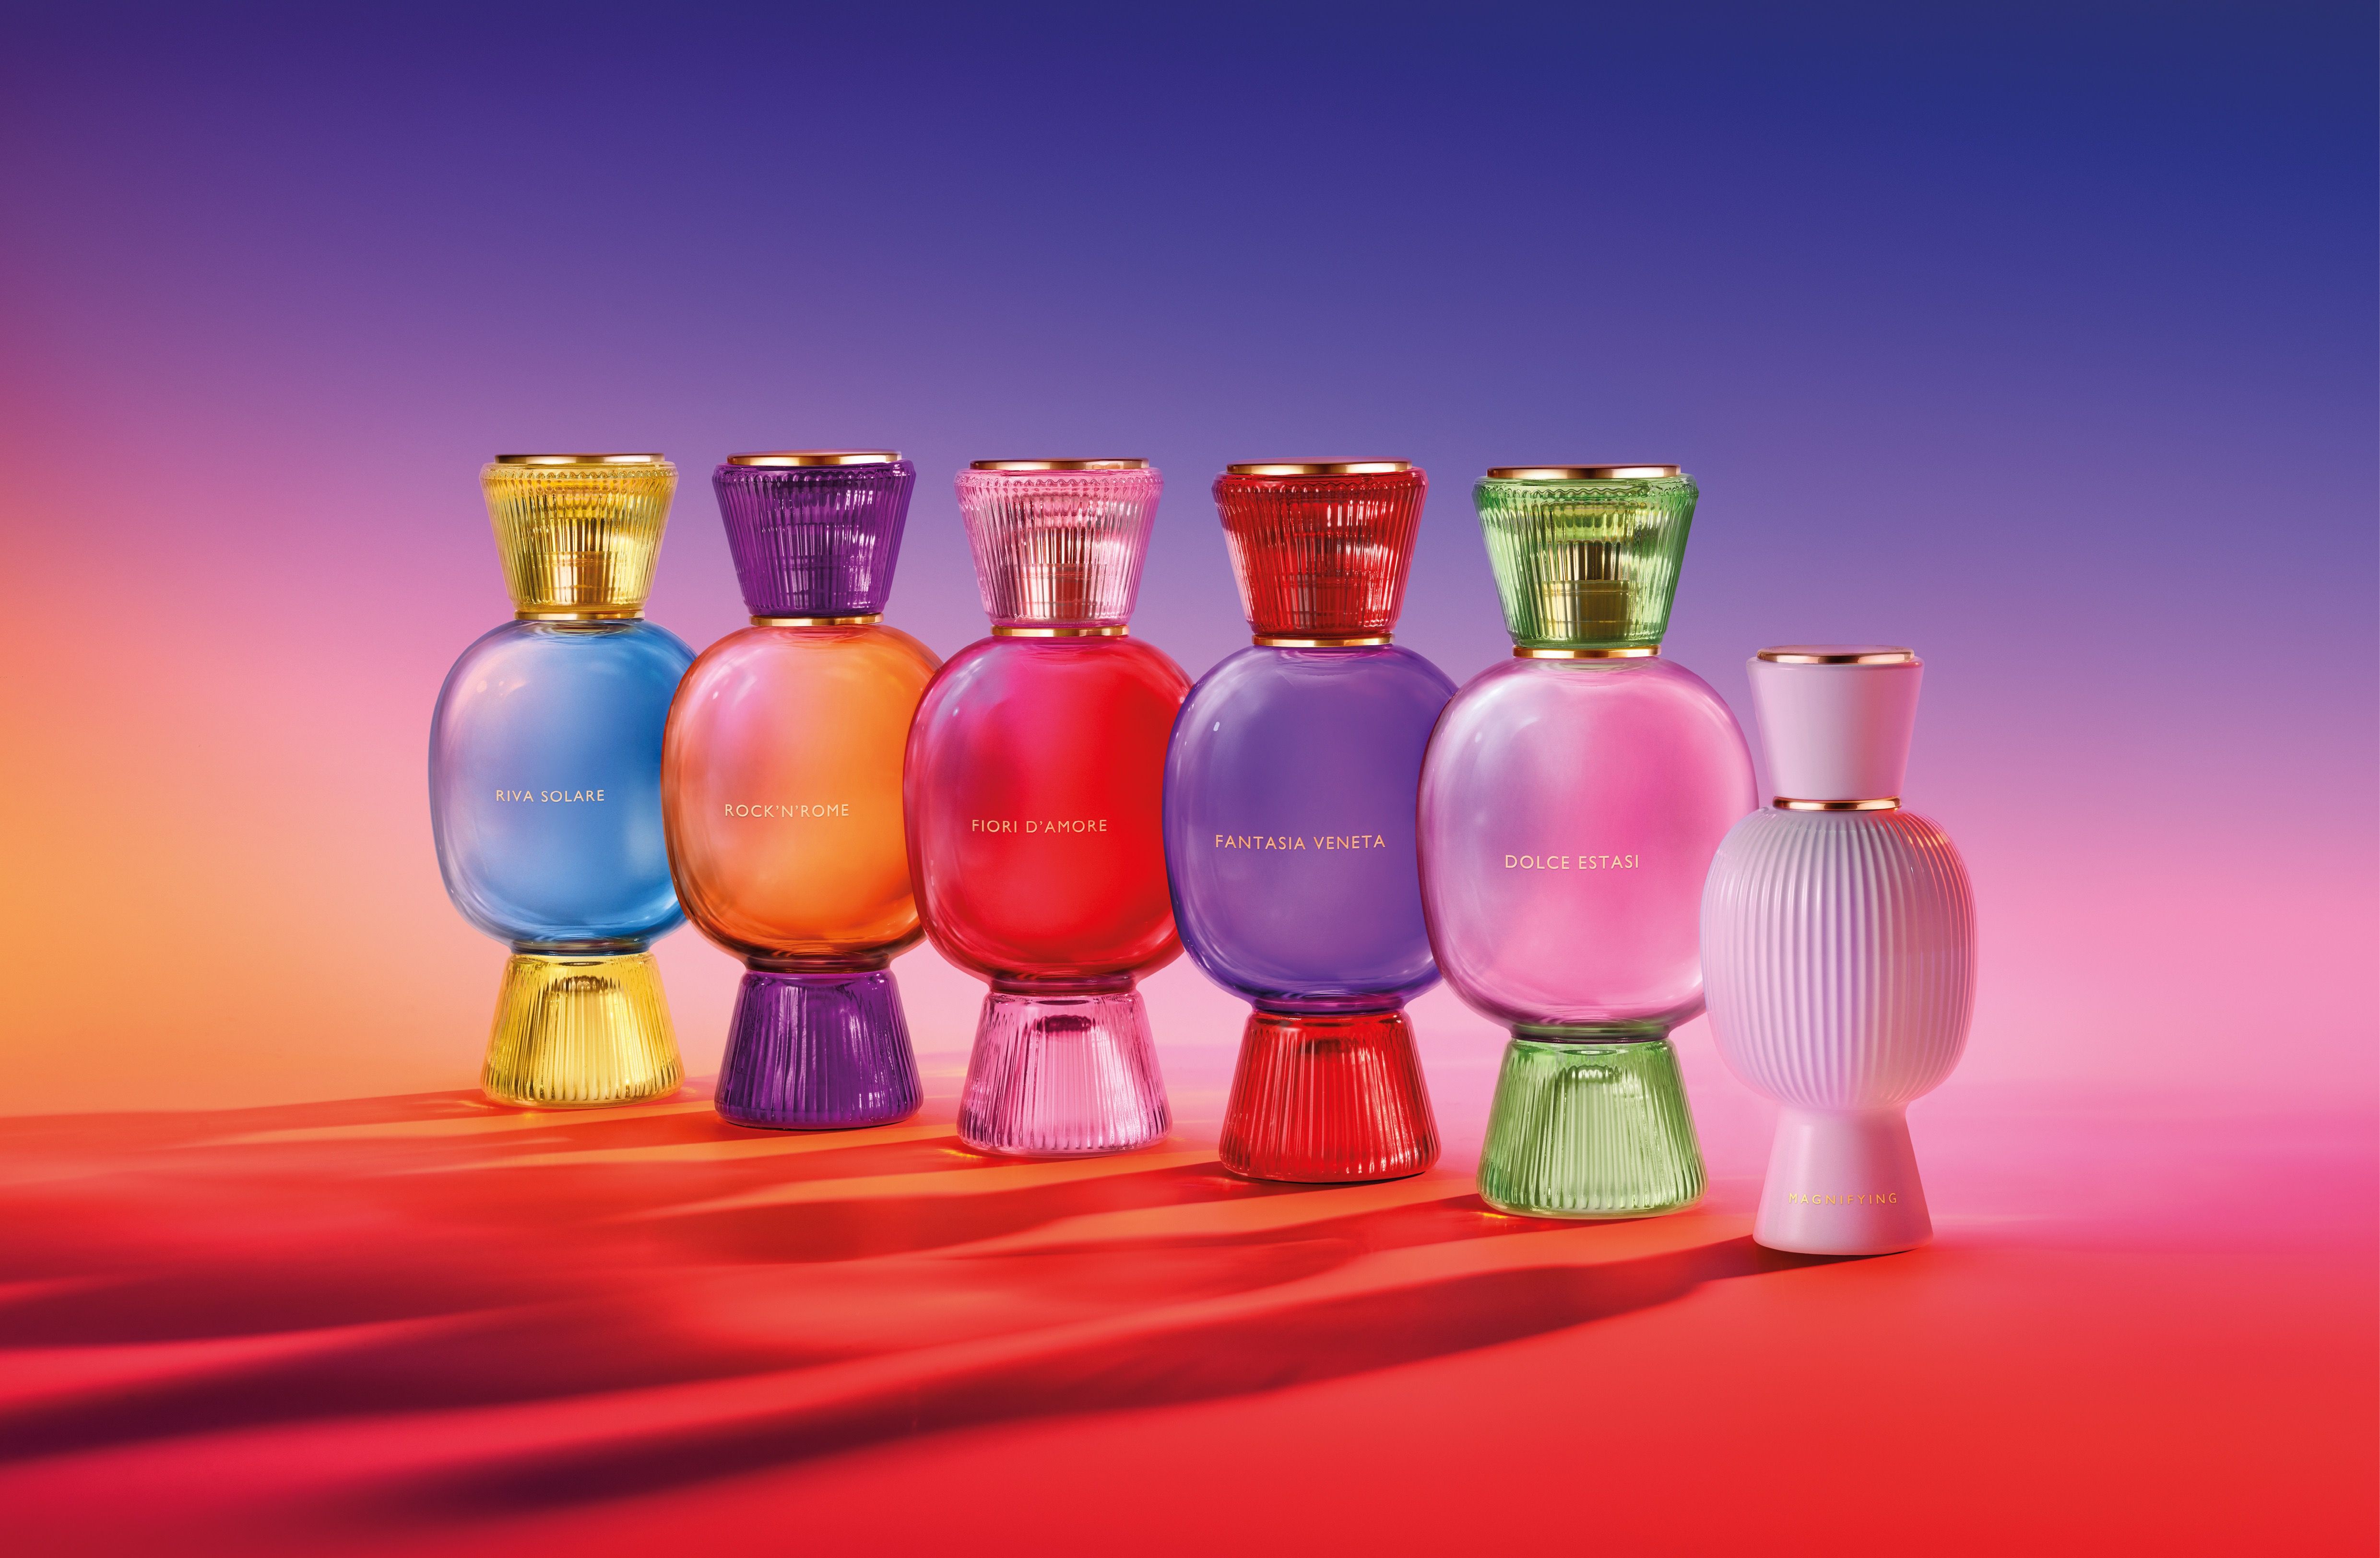 Bulgari's New Allegra Perfume Collection Will Spark Joy